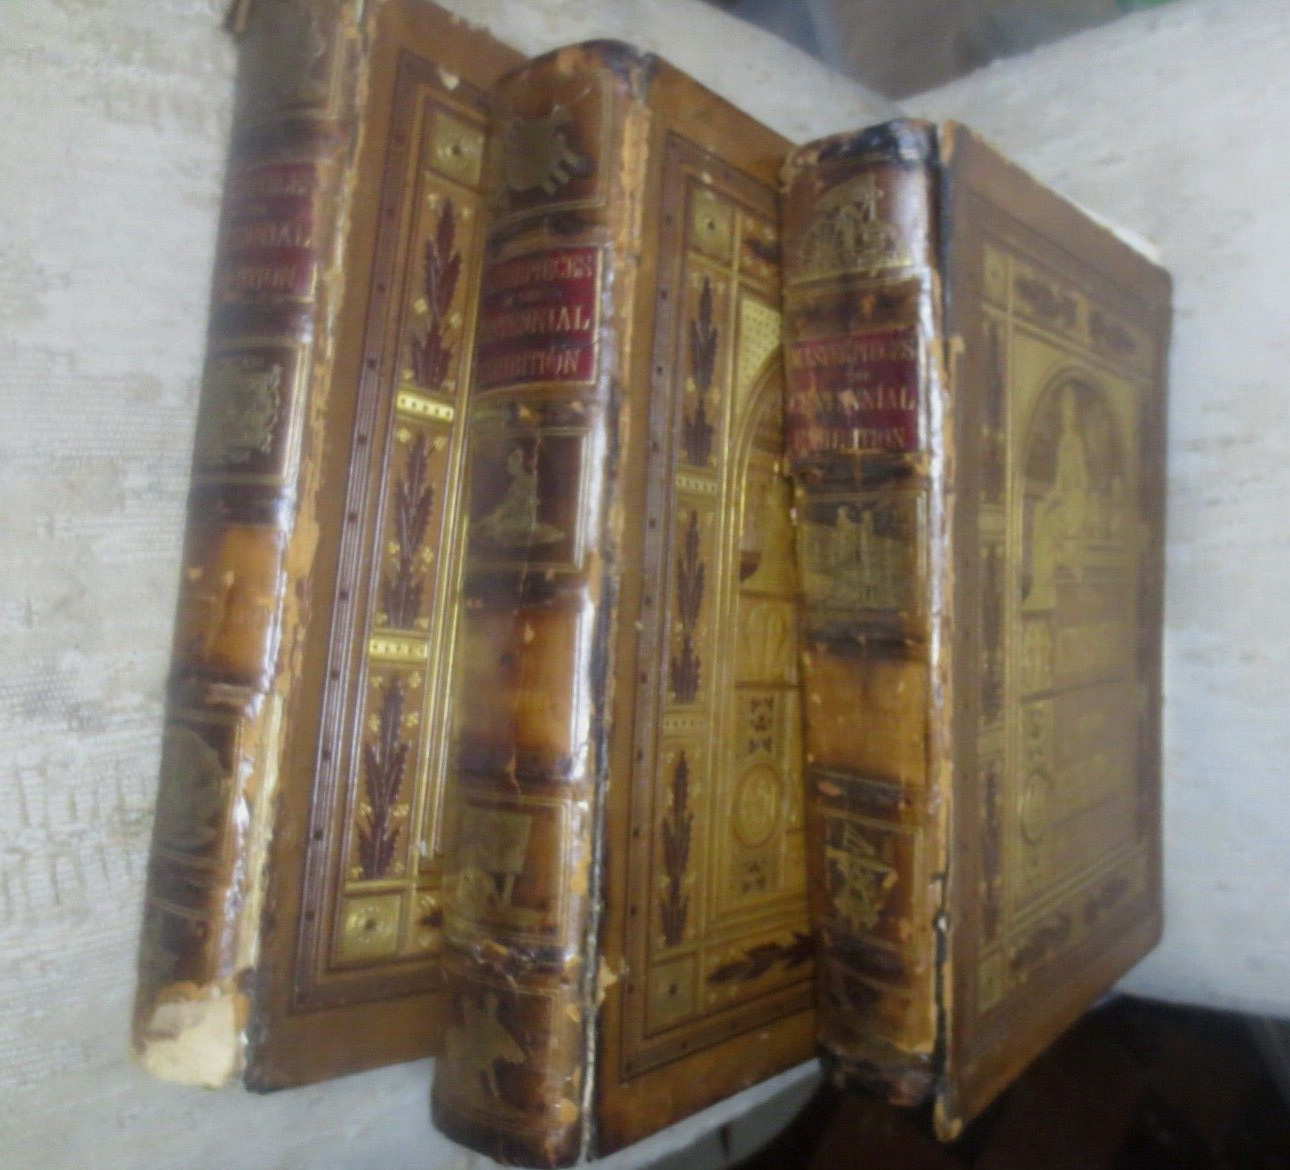 1876 Antique Art Books Masterpieces of Centennial International Exhibition 3 vol